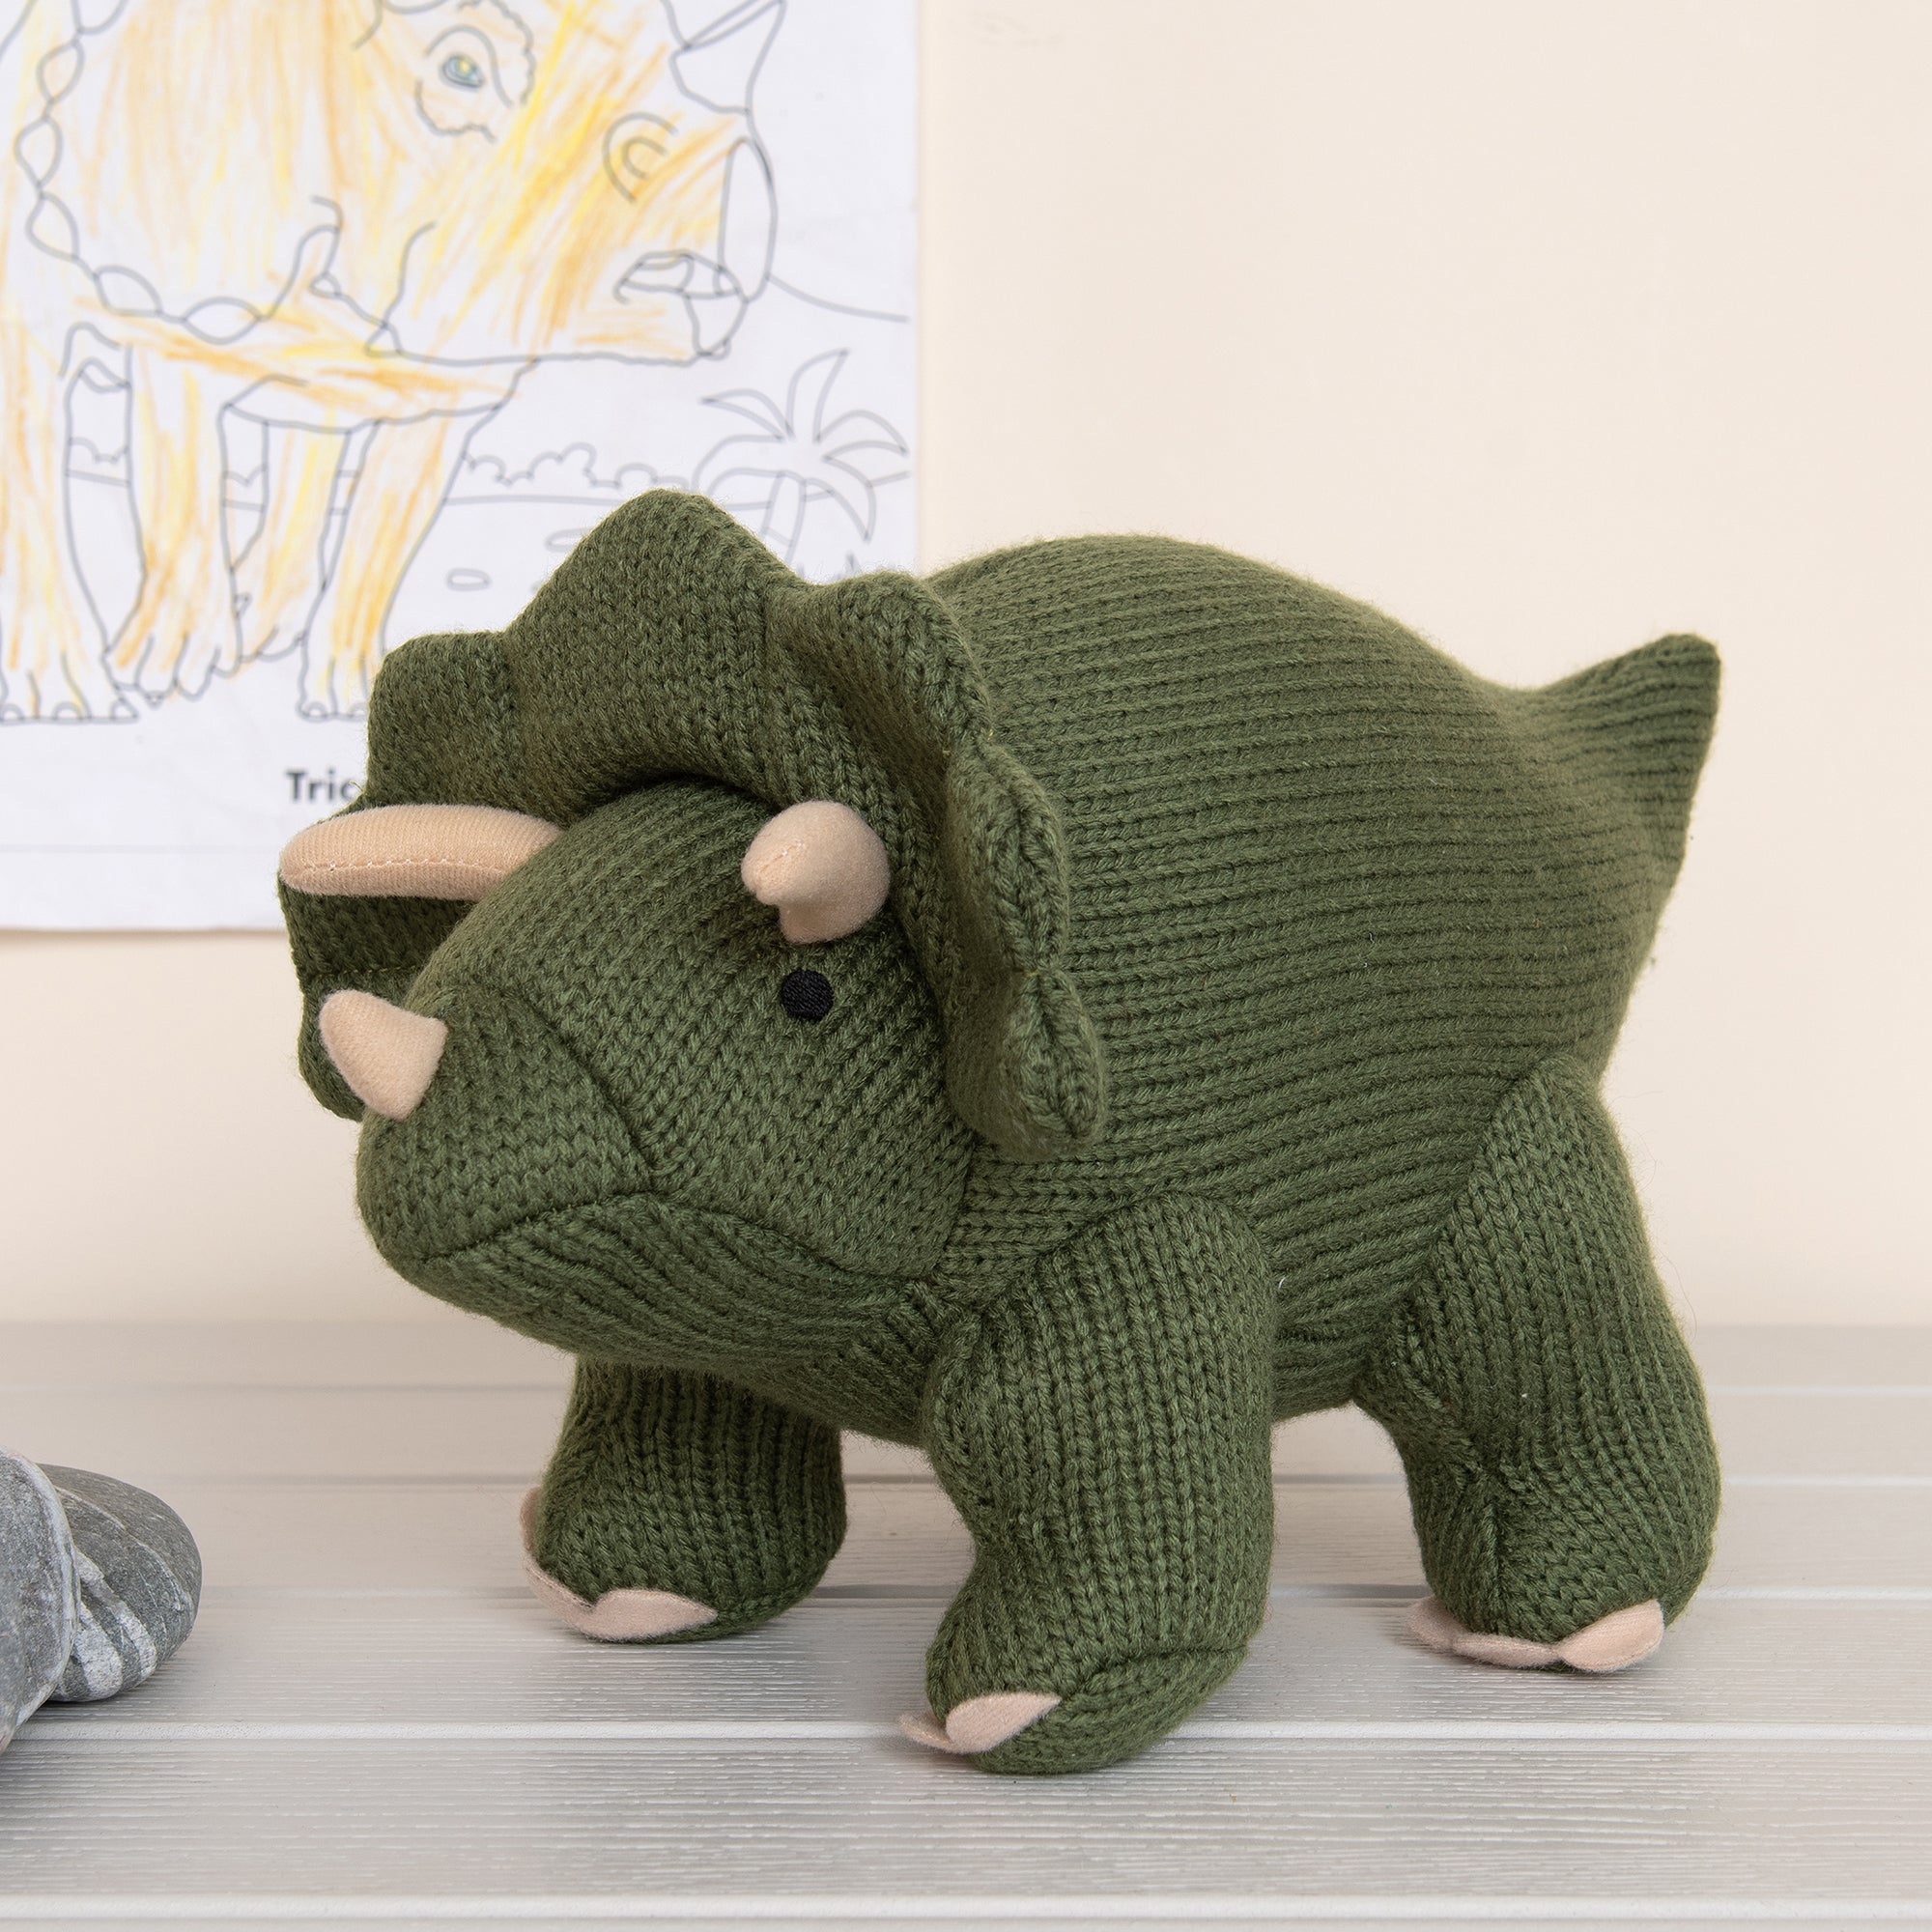 Knitted Triceratops Dinosaur Soft Toy - Khaki